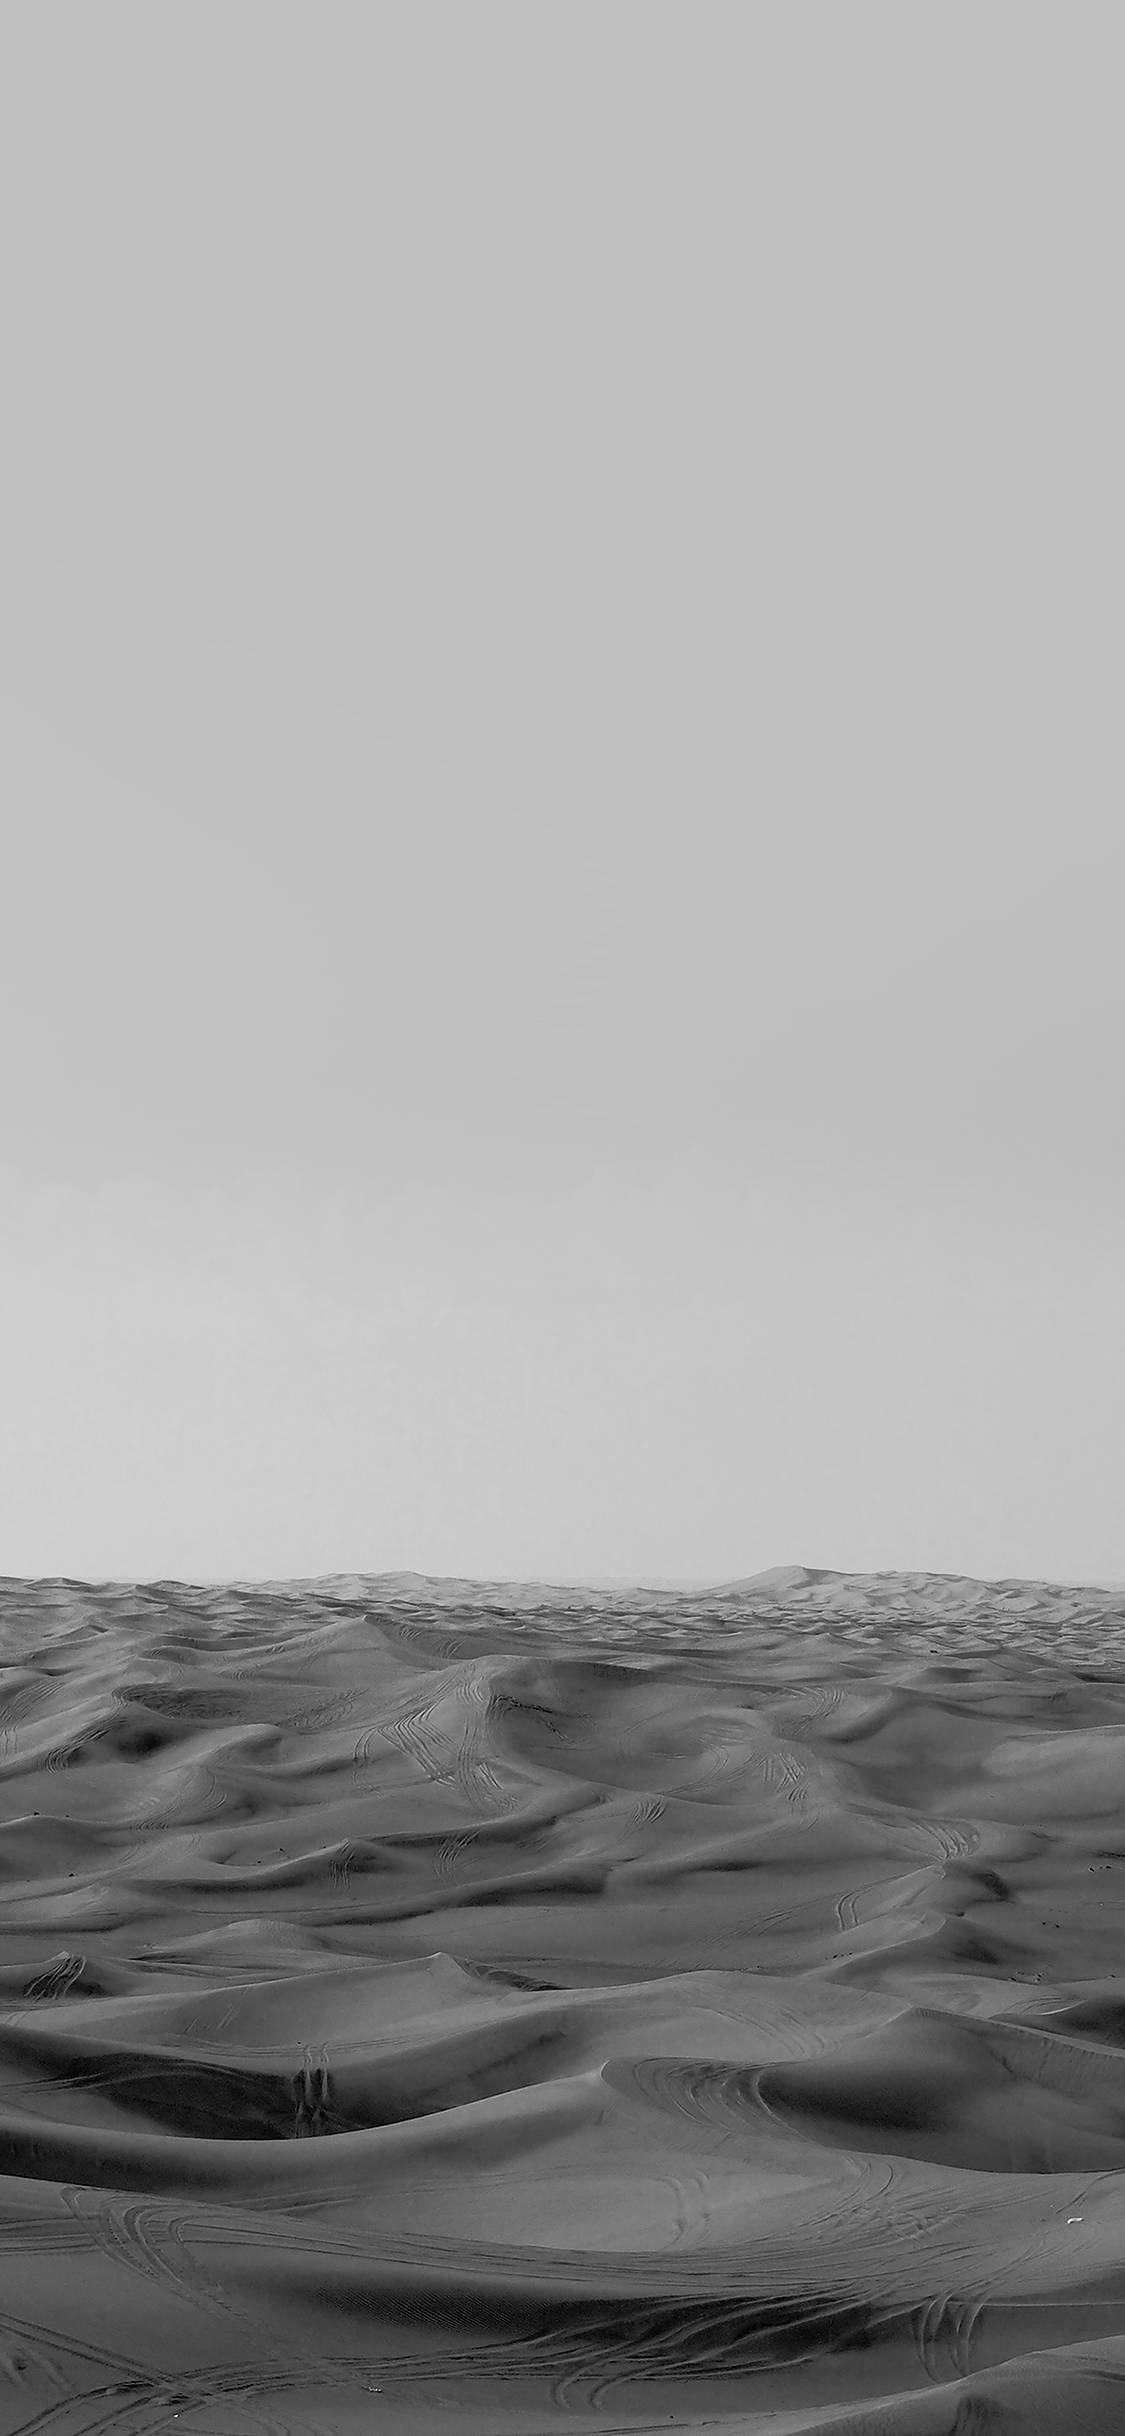 Download Desert Sand Dunes Minimal Dark Iphone Wallpaper 